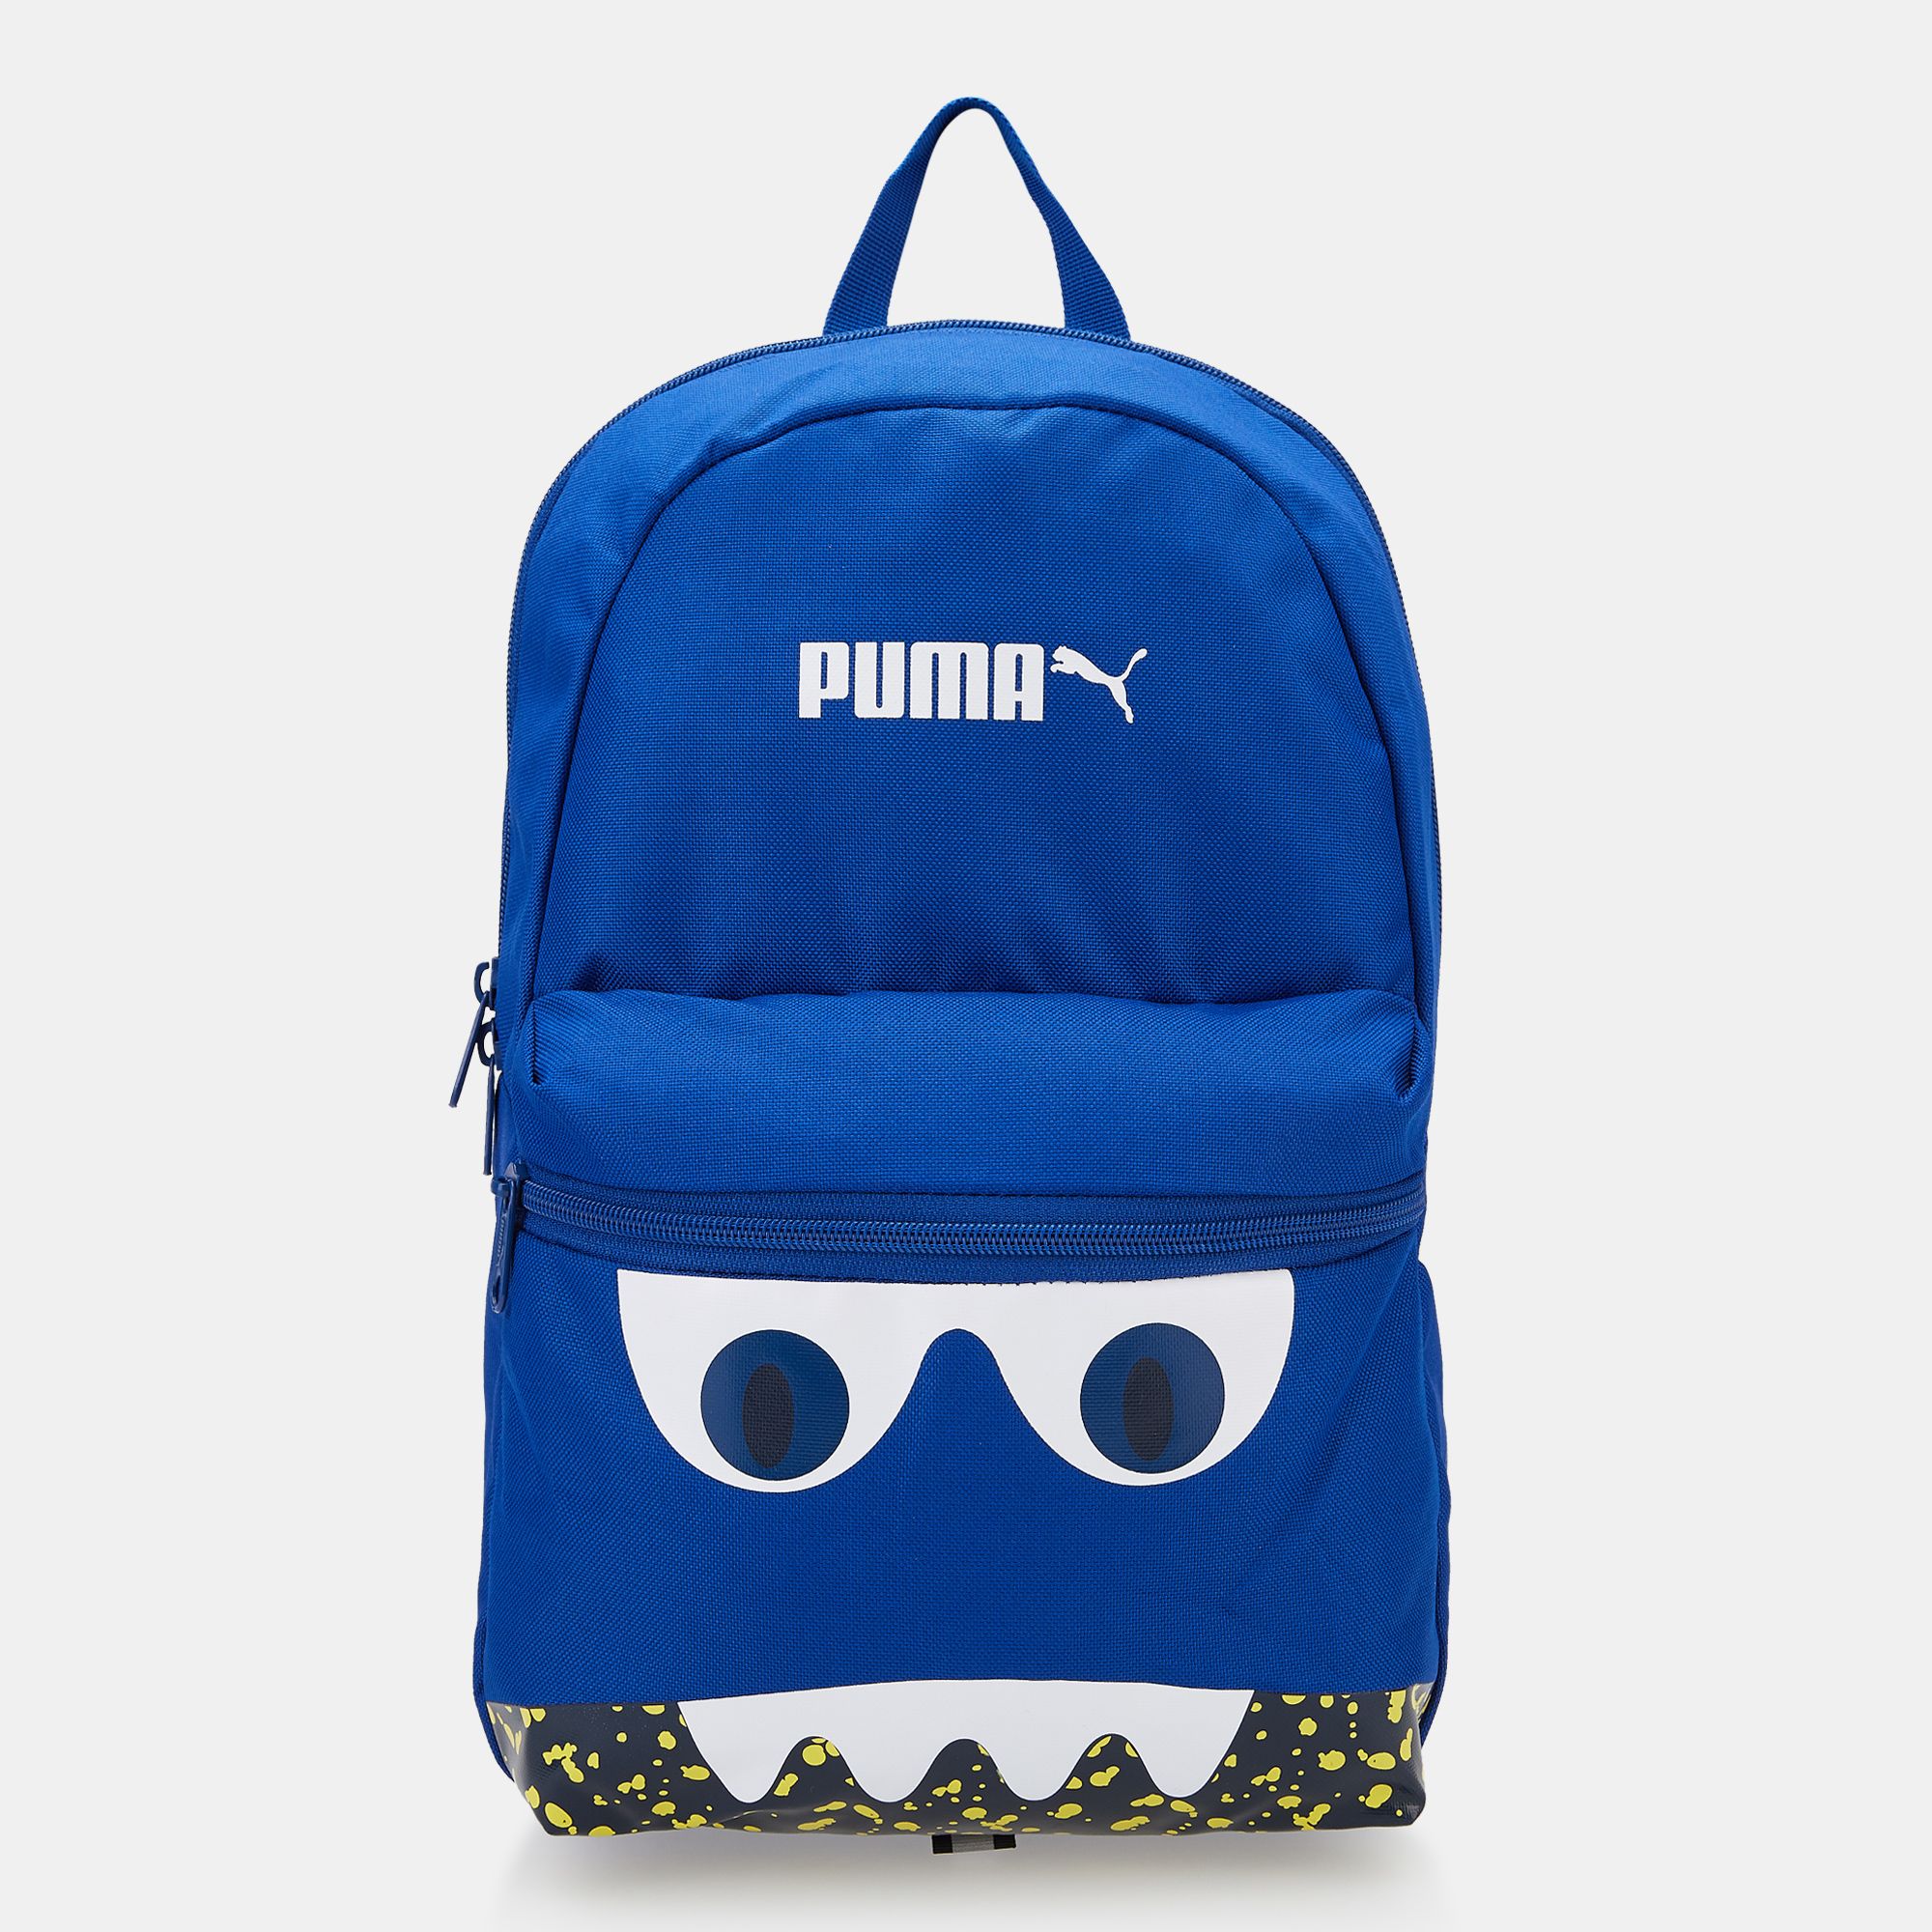 puma backpack for boys